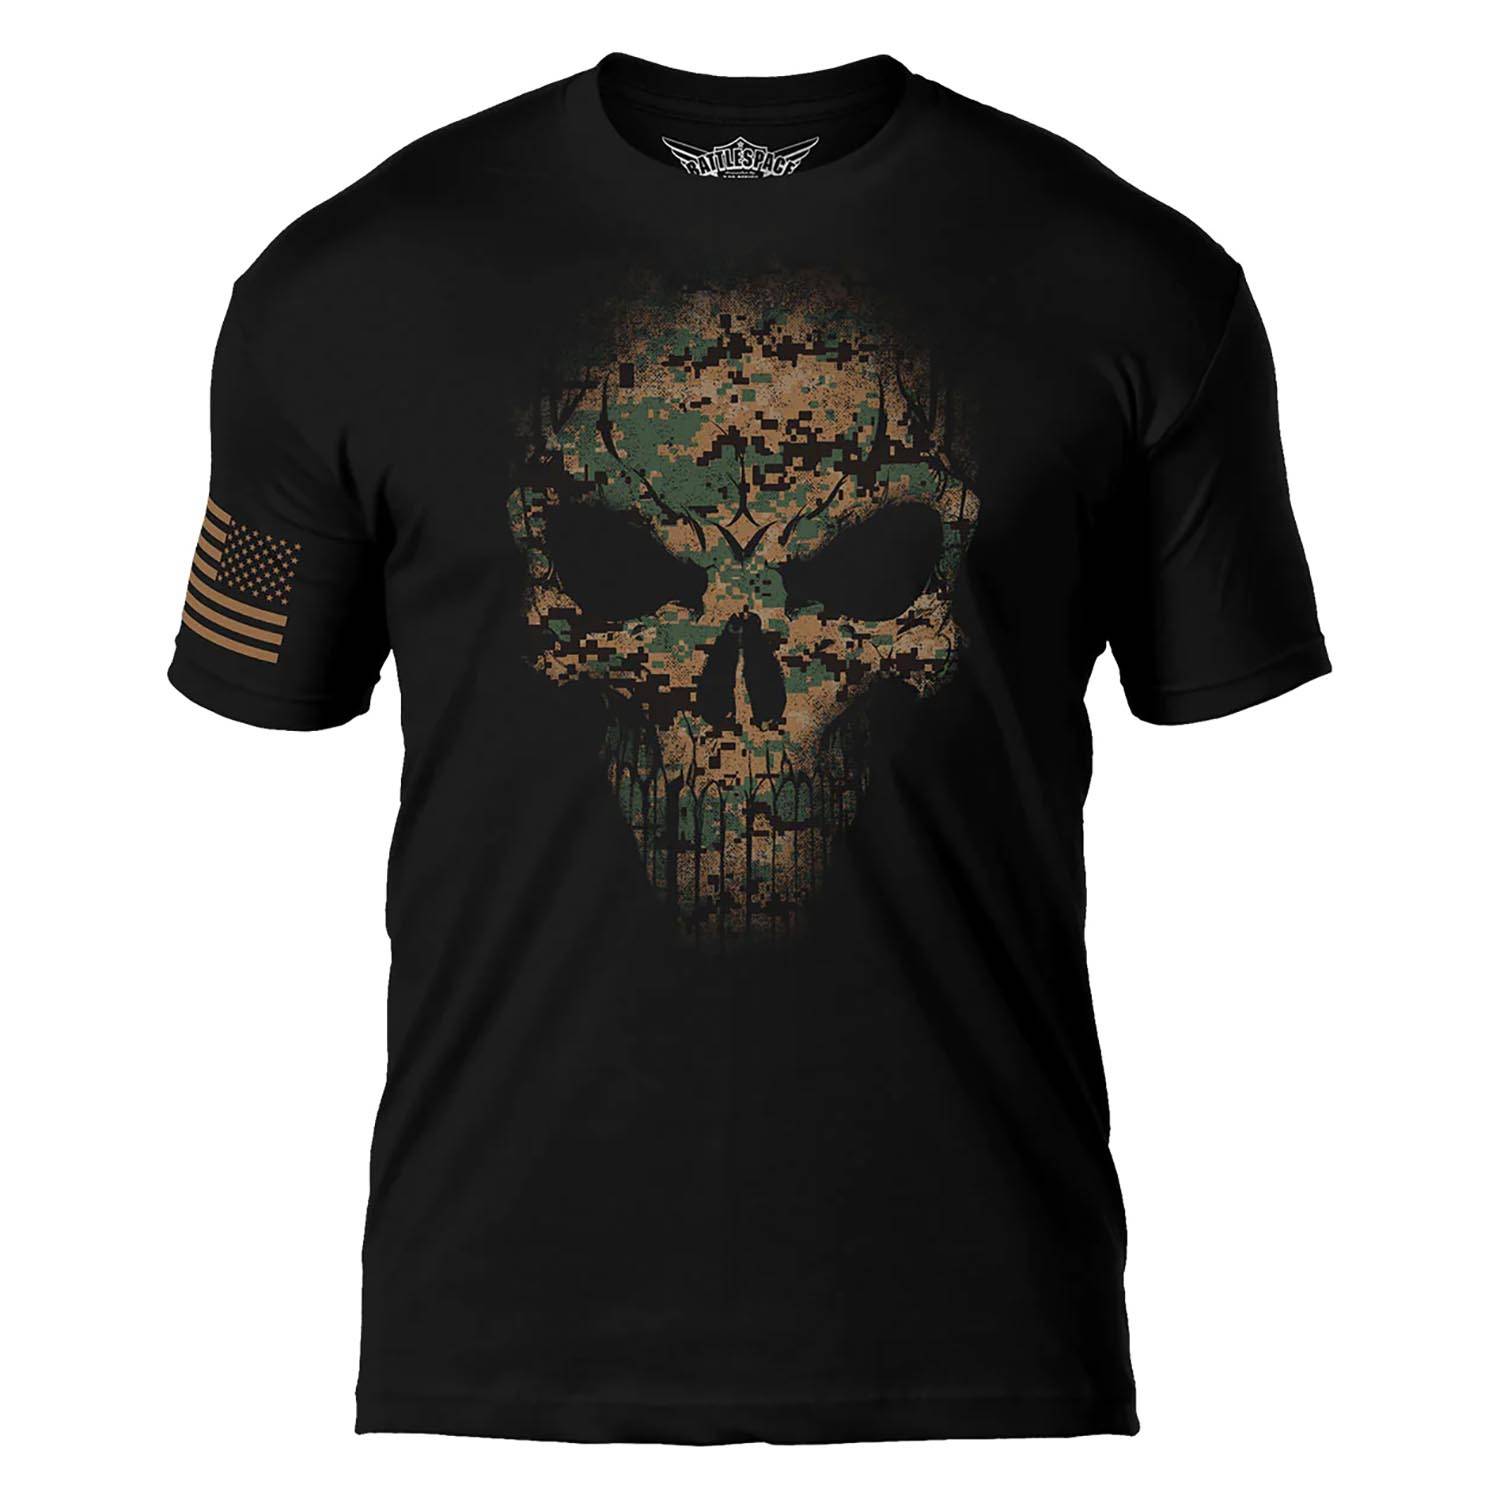 The 7.62 Design Woodland MARPAT Skull T-Shirt